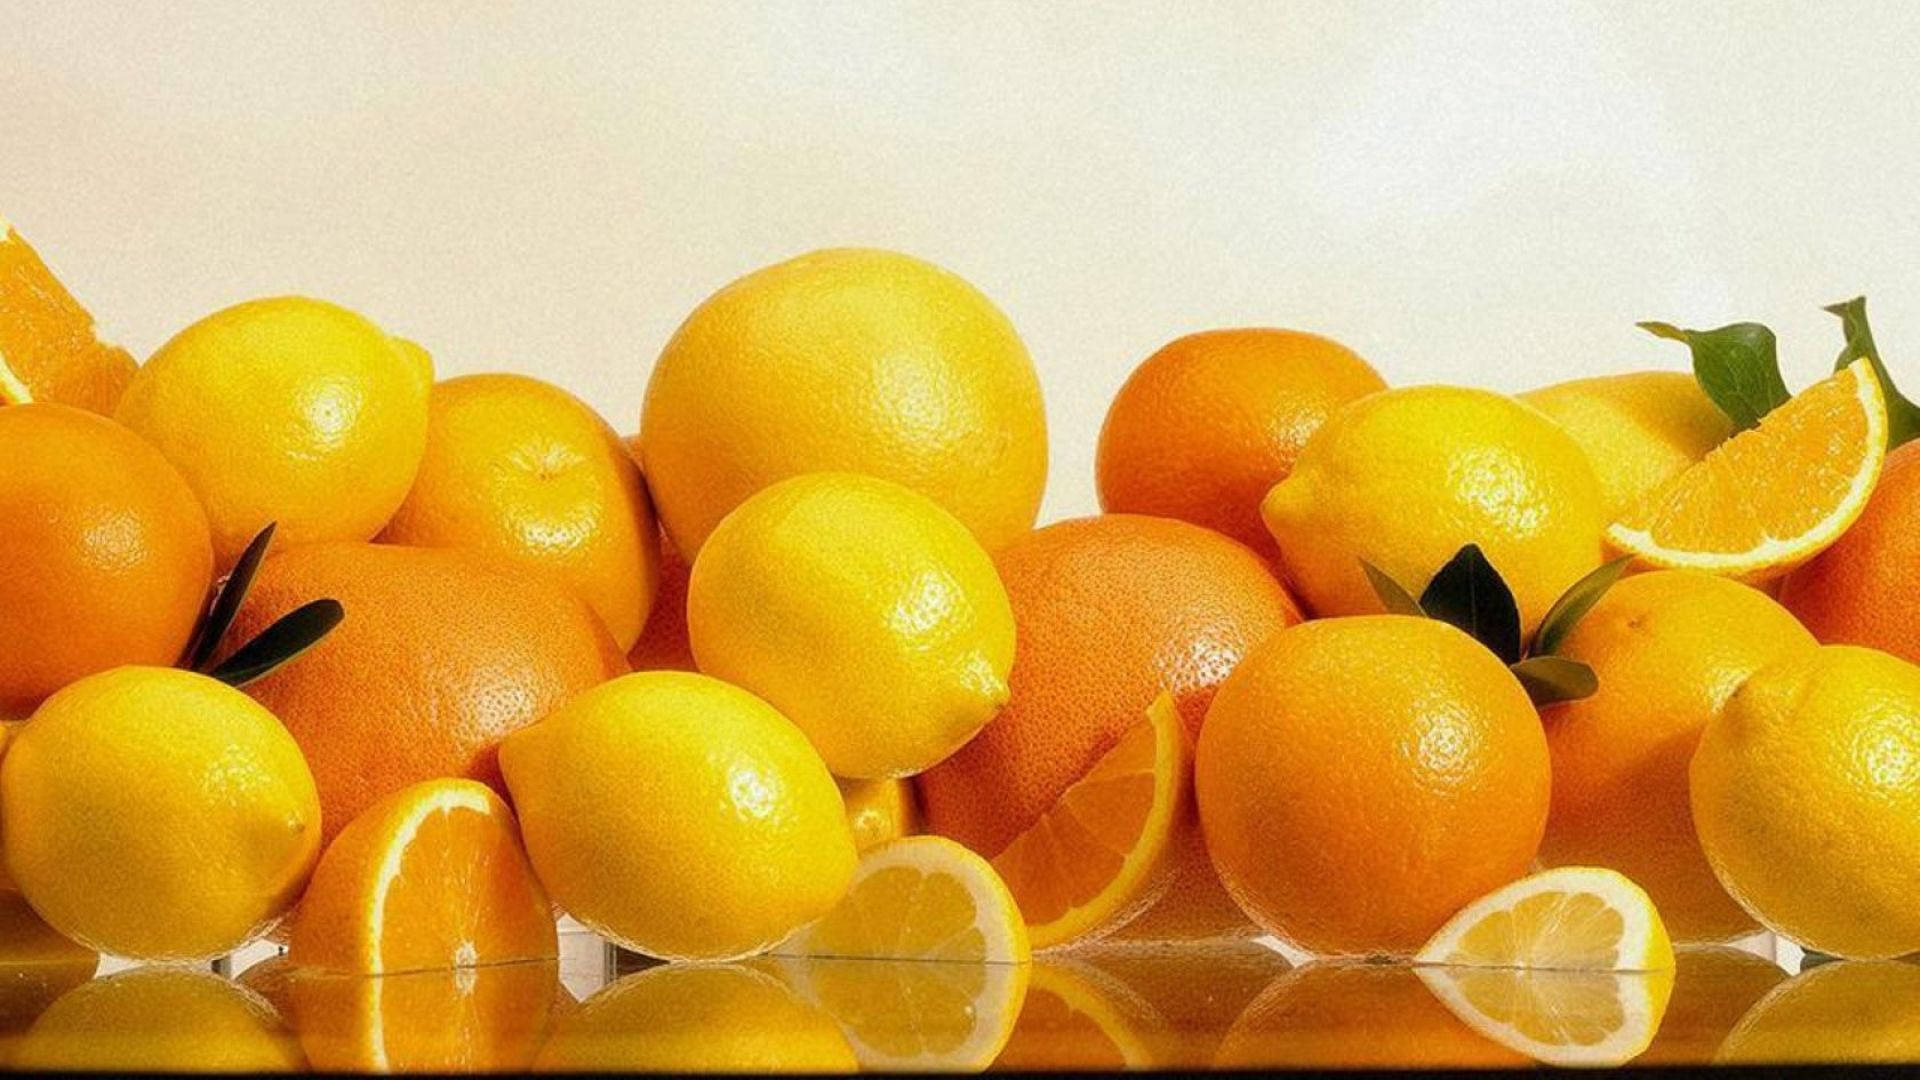 Orange Fruits On The Table Background